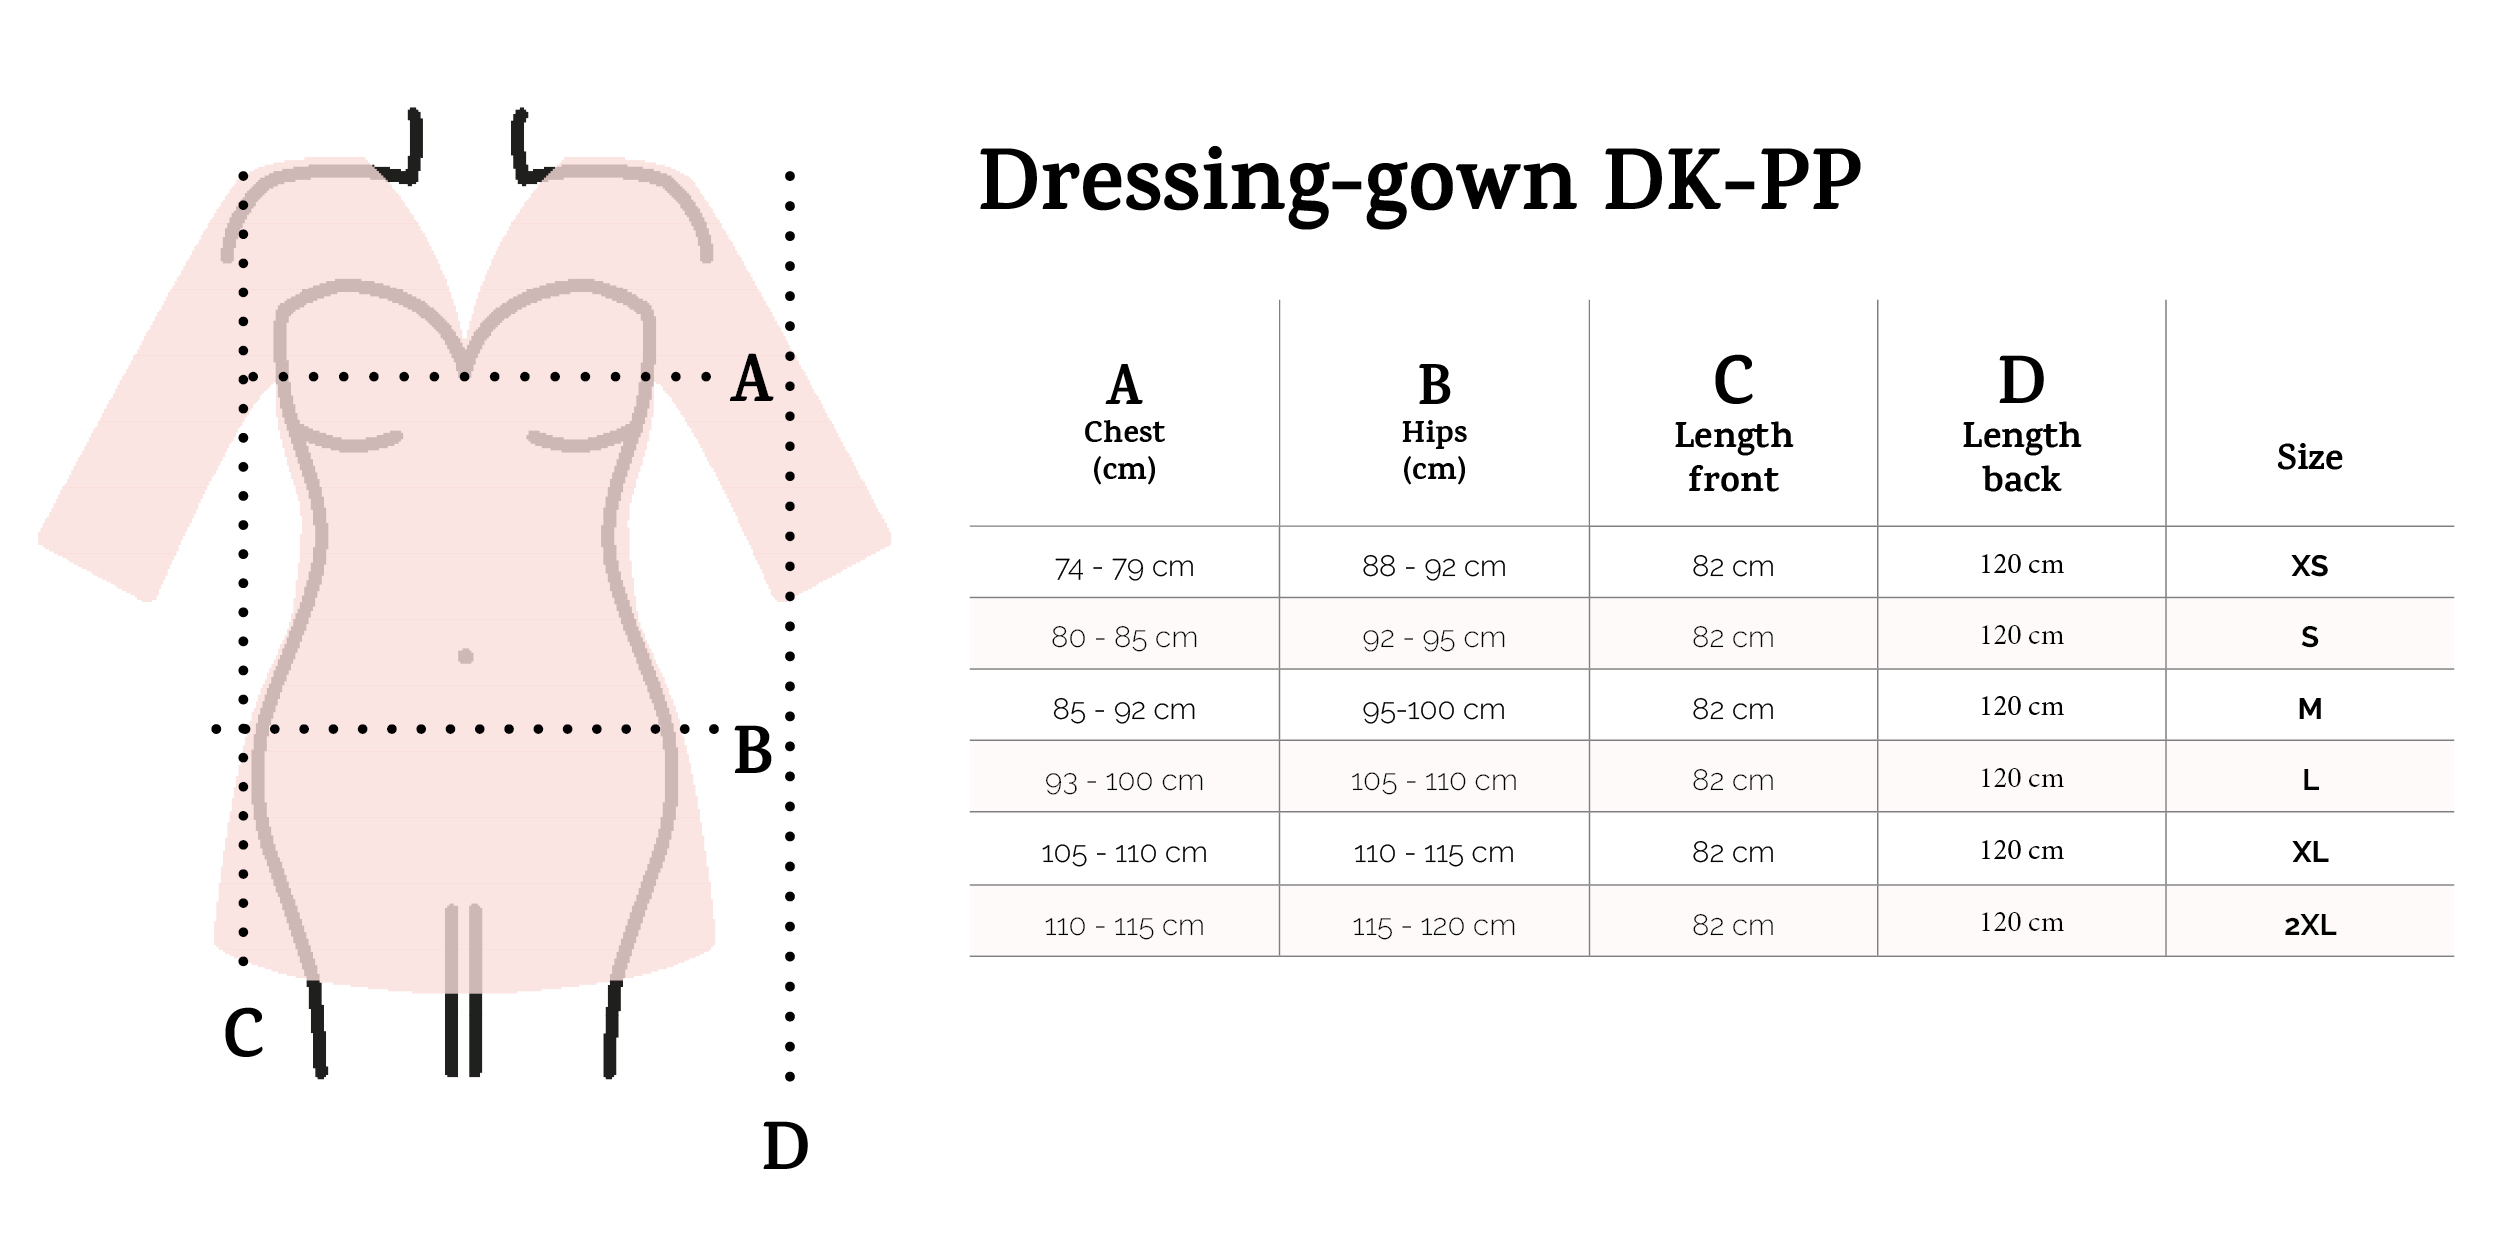 Dressing-gown DK-PP